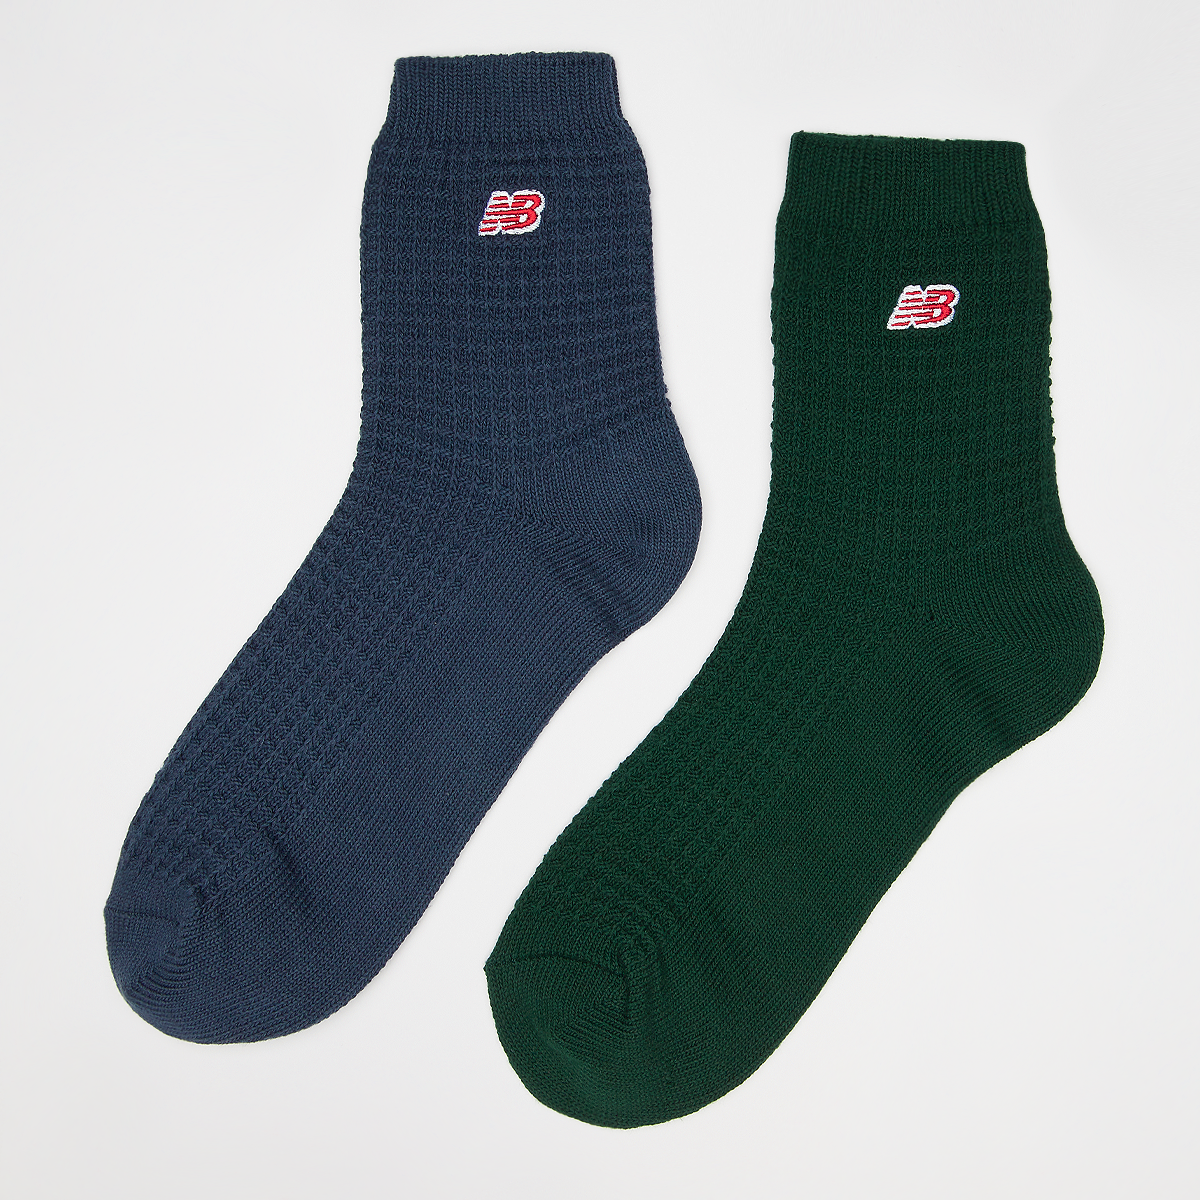 New Balance Waffle Knit Ankle Socks (2 Pack) Middellang Heren green navy maat: 35-38 beschikbare maaten:35-38 39-42 43-46